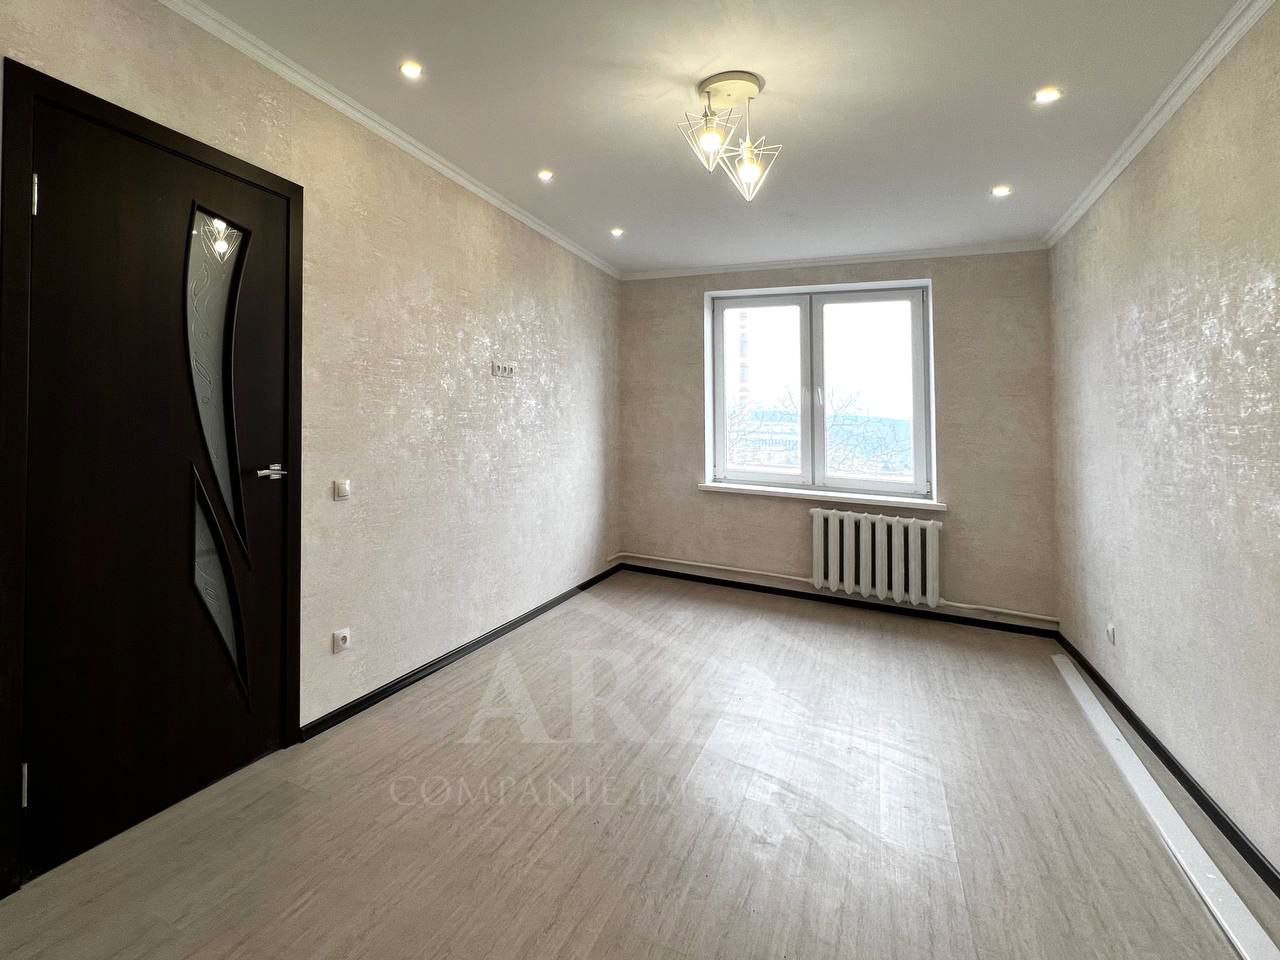 VÂNDUT Apartament de vânzare, Chișinău, sec. Ciocana, o odaie, reparat, 33m2, et. 5